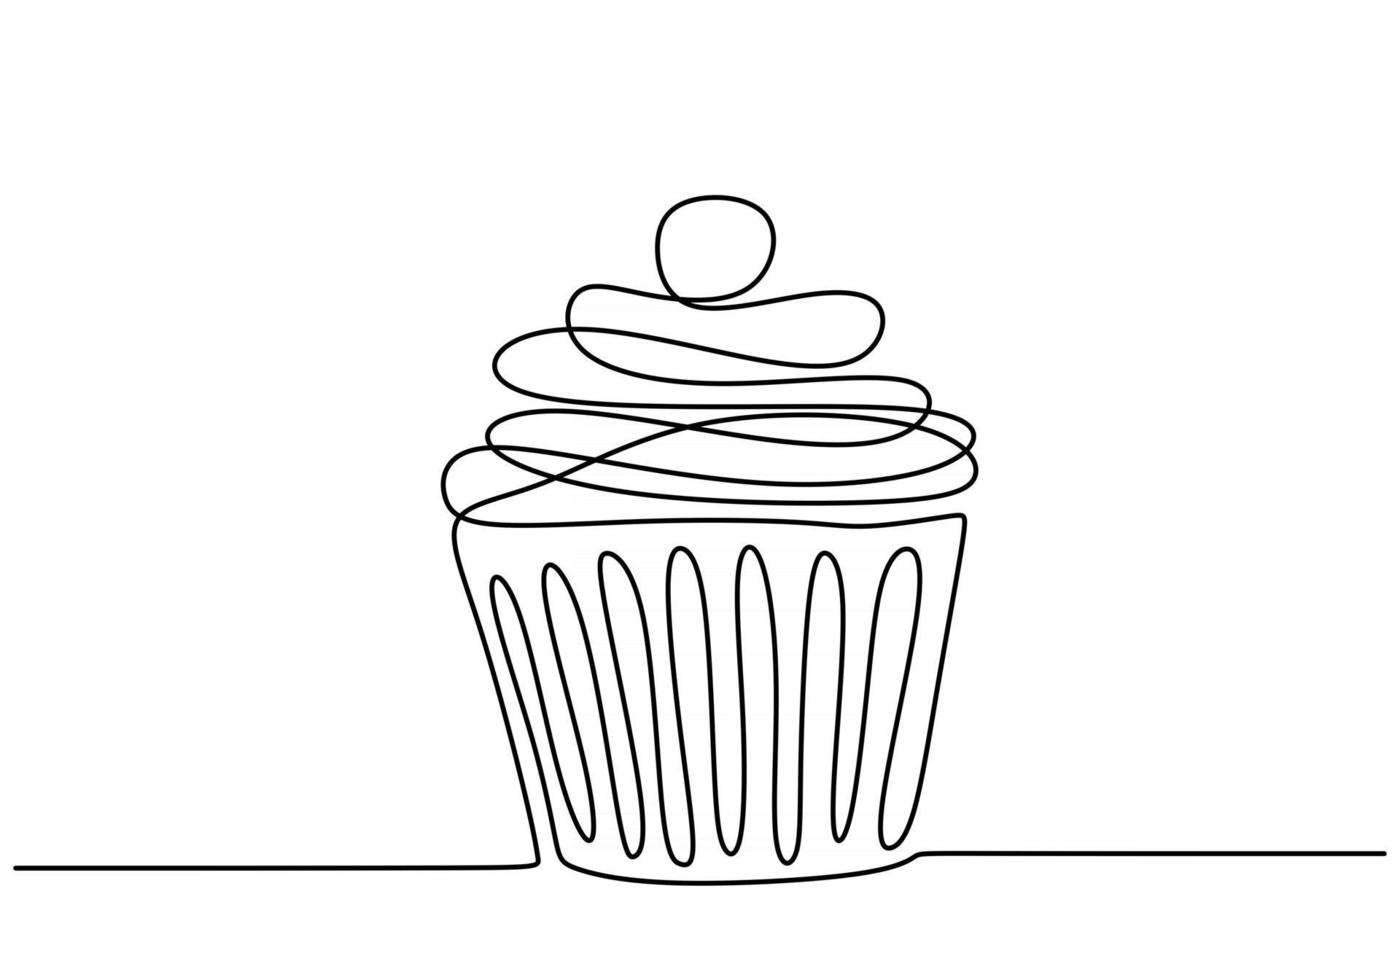 línea continua única de cupcake. Cupcake de comida rápida en un estilo de línea aislado sobre fondo blanco. vector